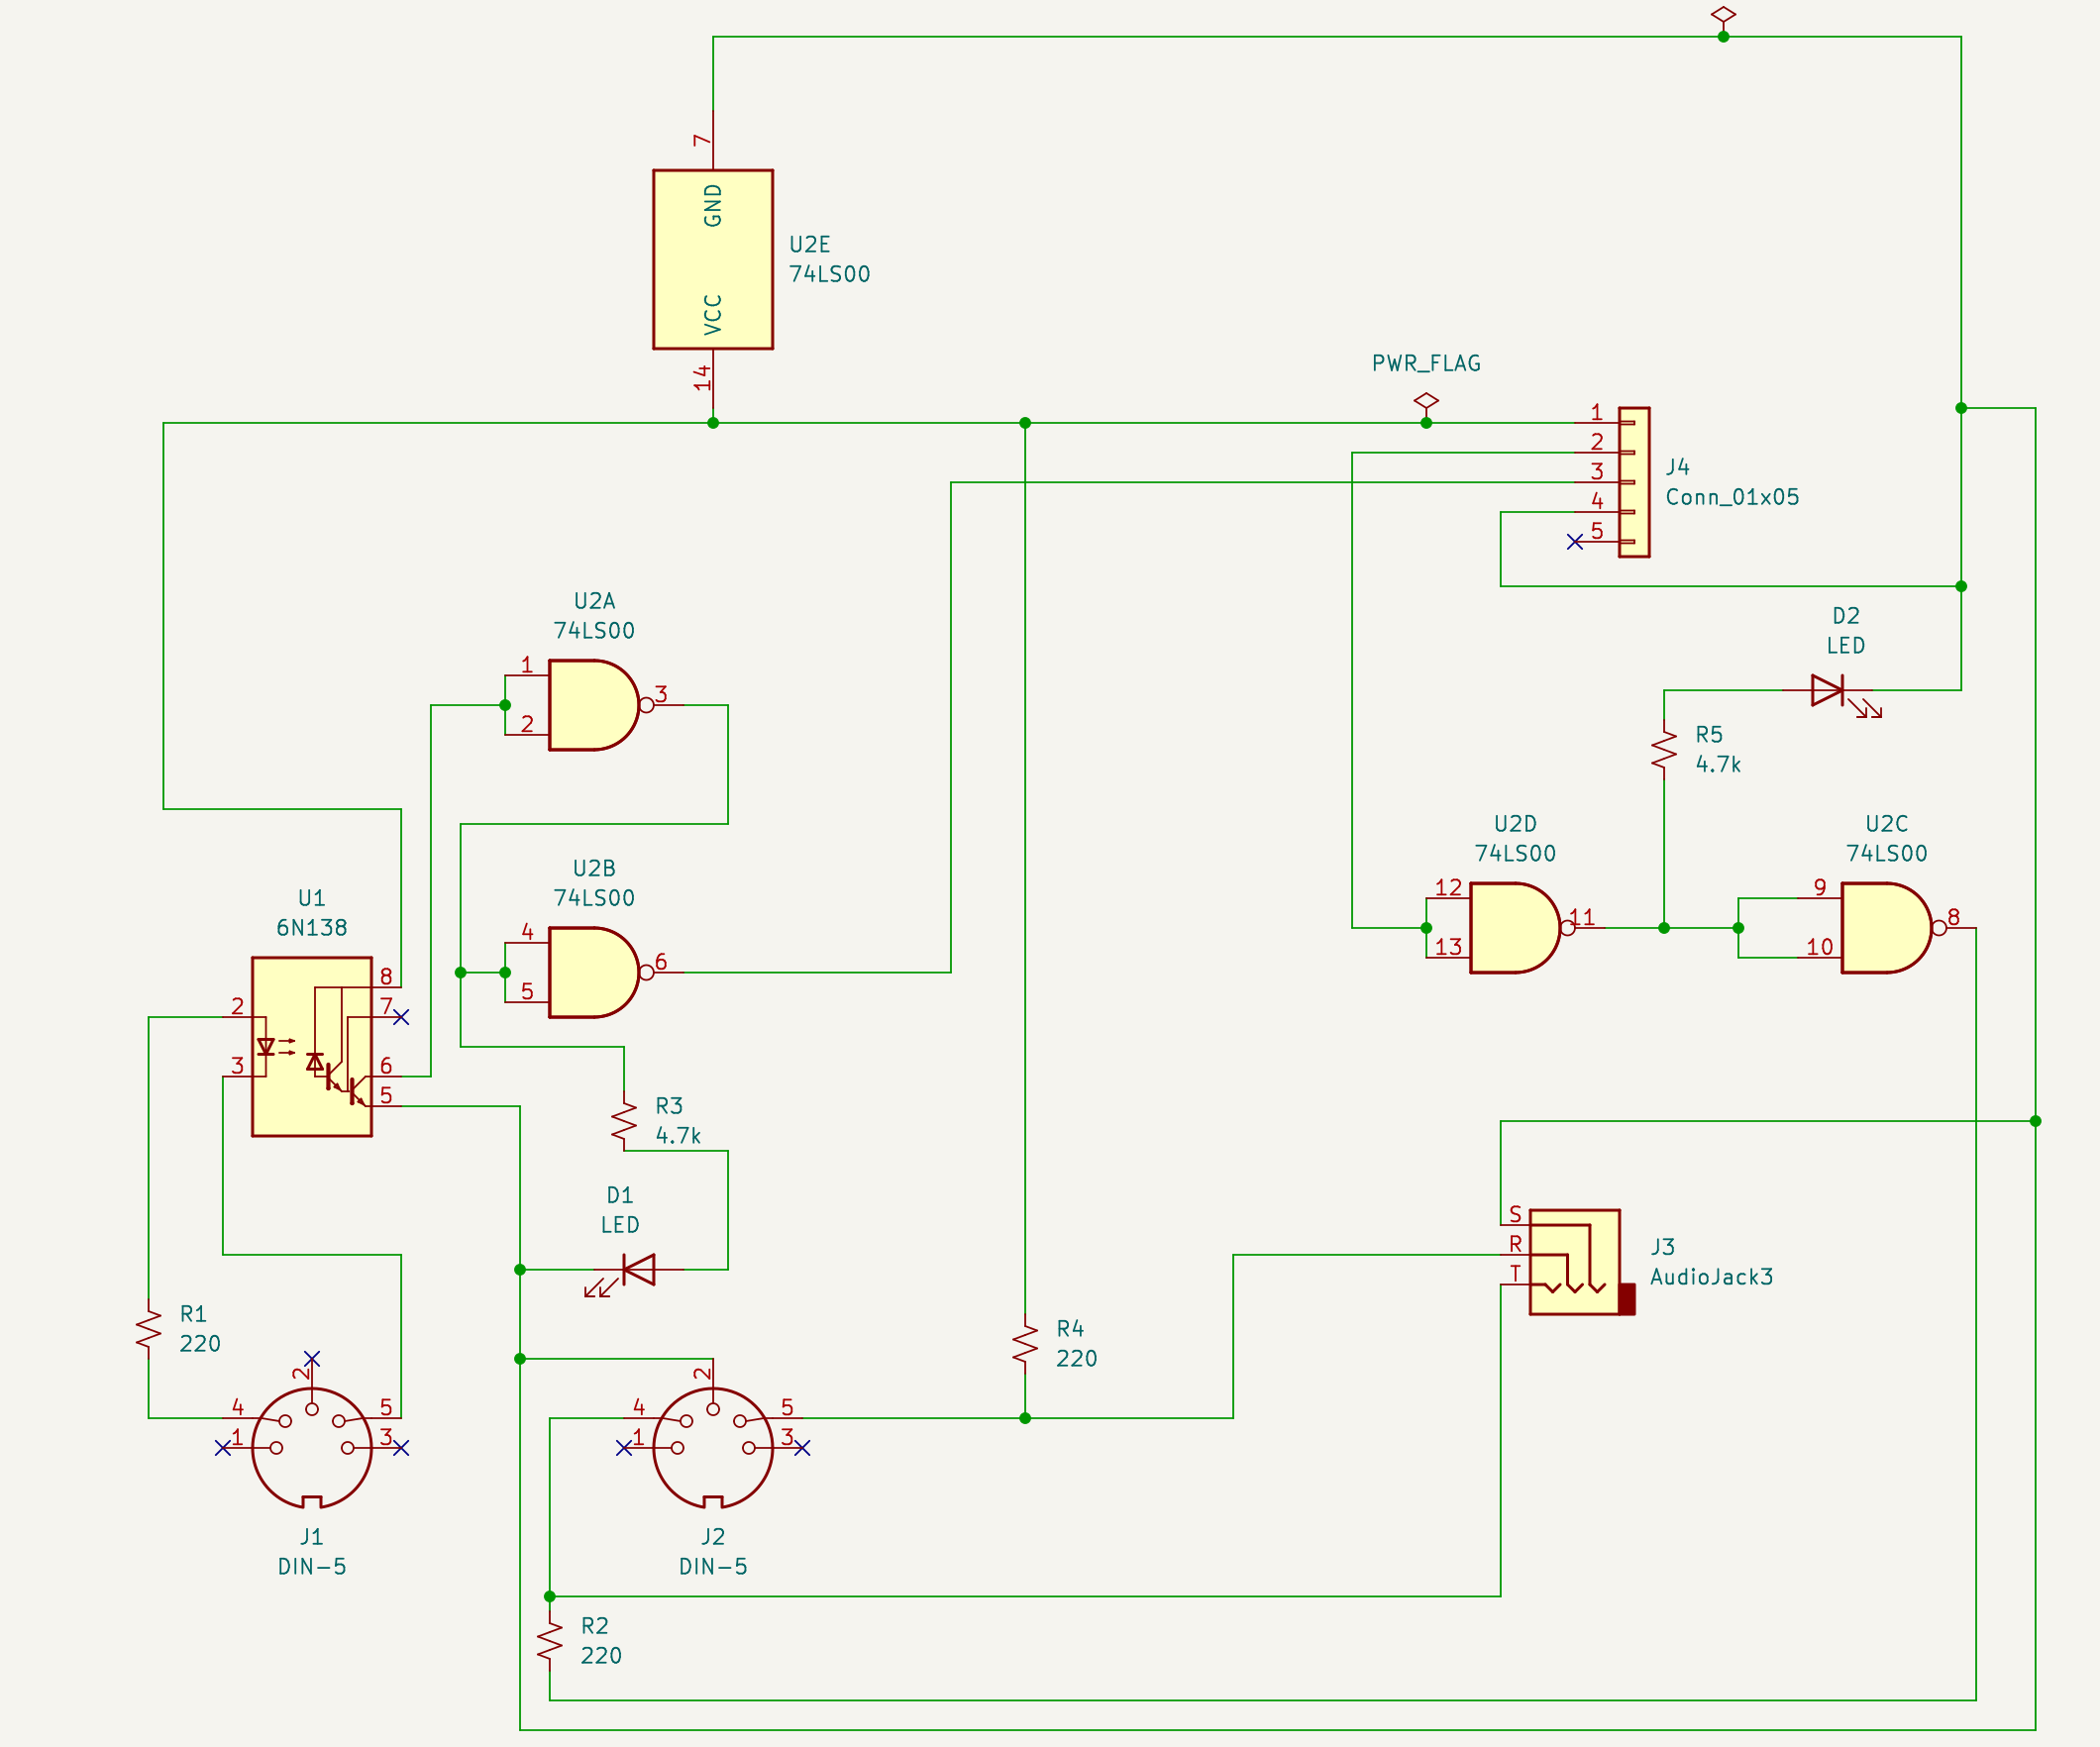 Schematic of the MIDI box circuit. It's a basic MIDI interface circuit.